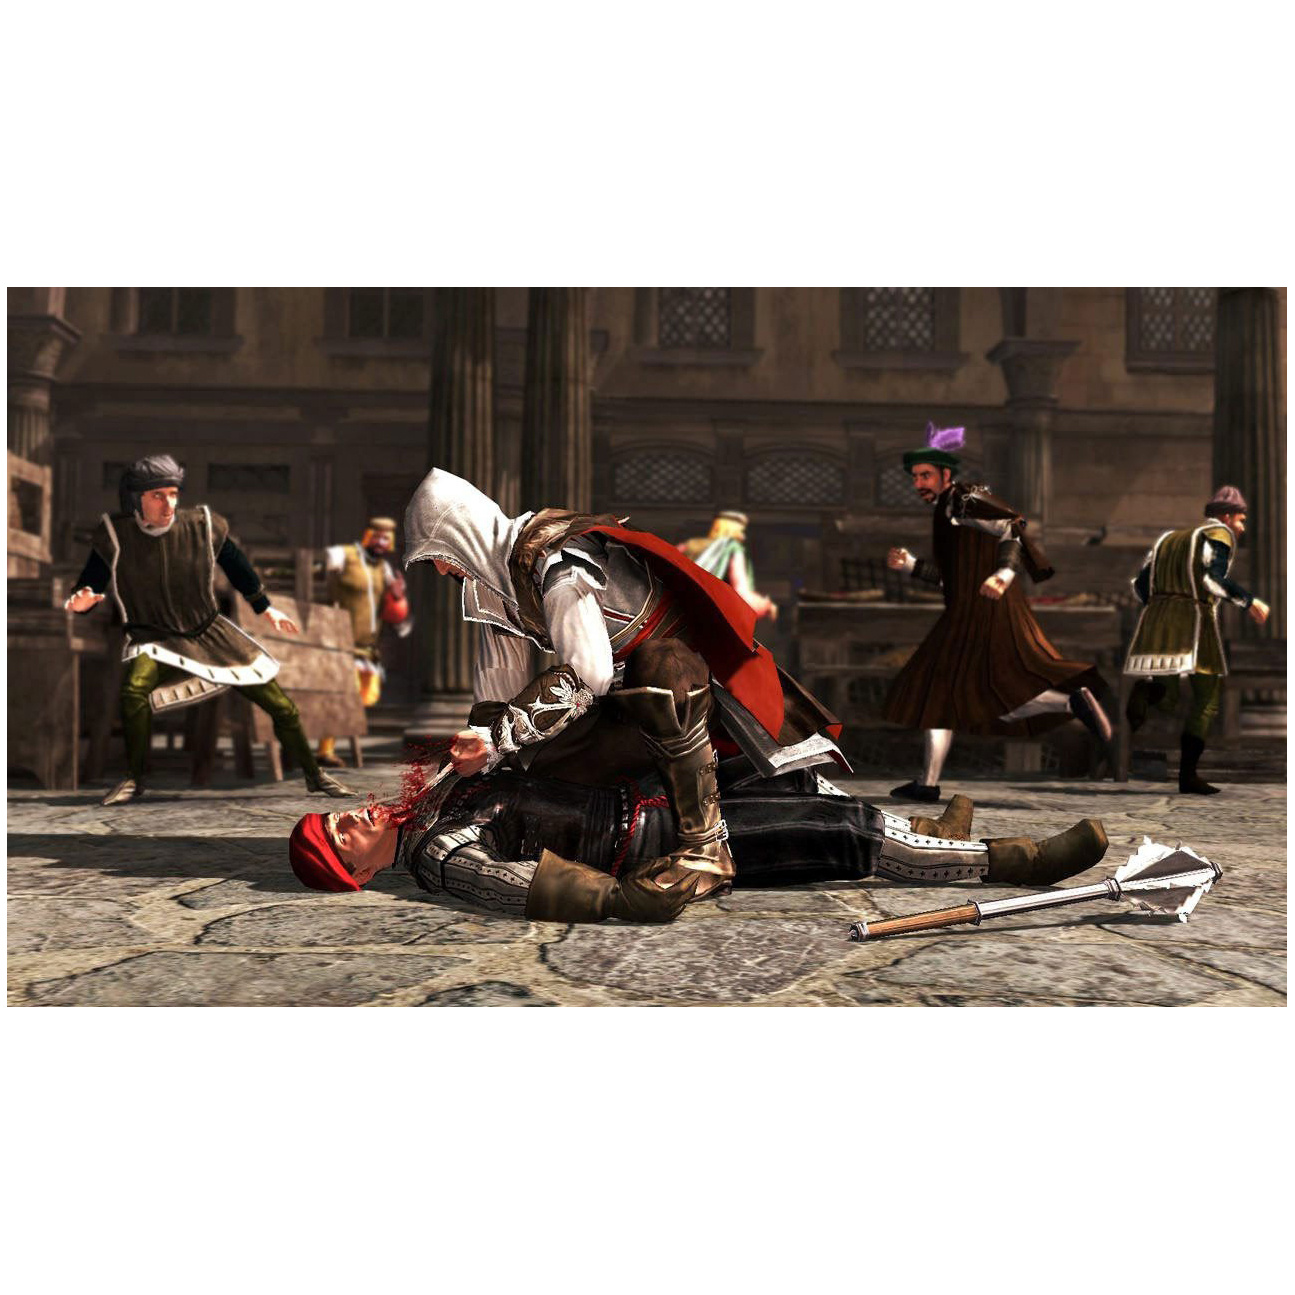 Ezio s family. Ассасин Крид 2. Assassin's Creed 2008. Ассасин Крид 2 Эцио Аудиторе. Ассасин 2лиядеруссо.